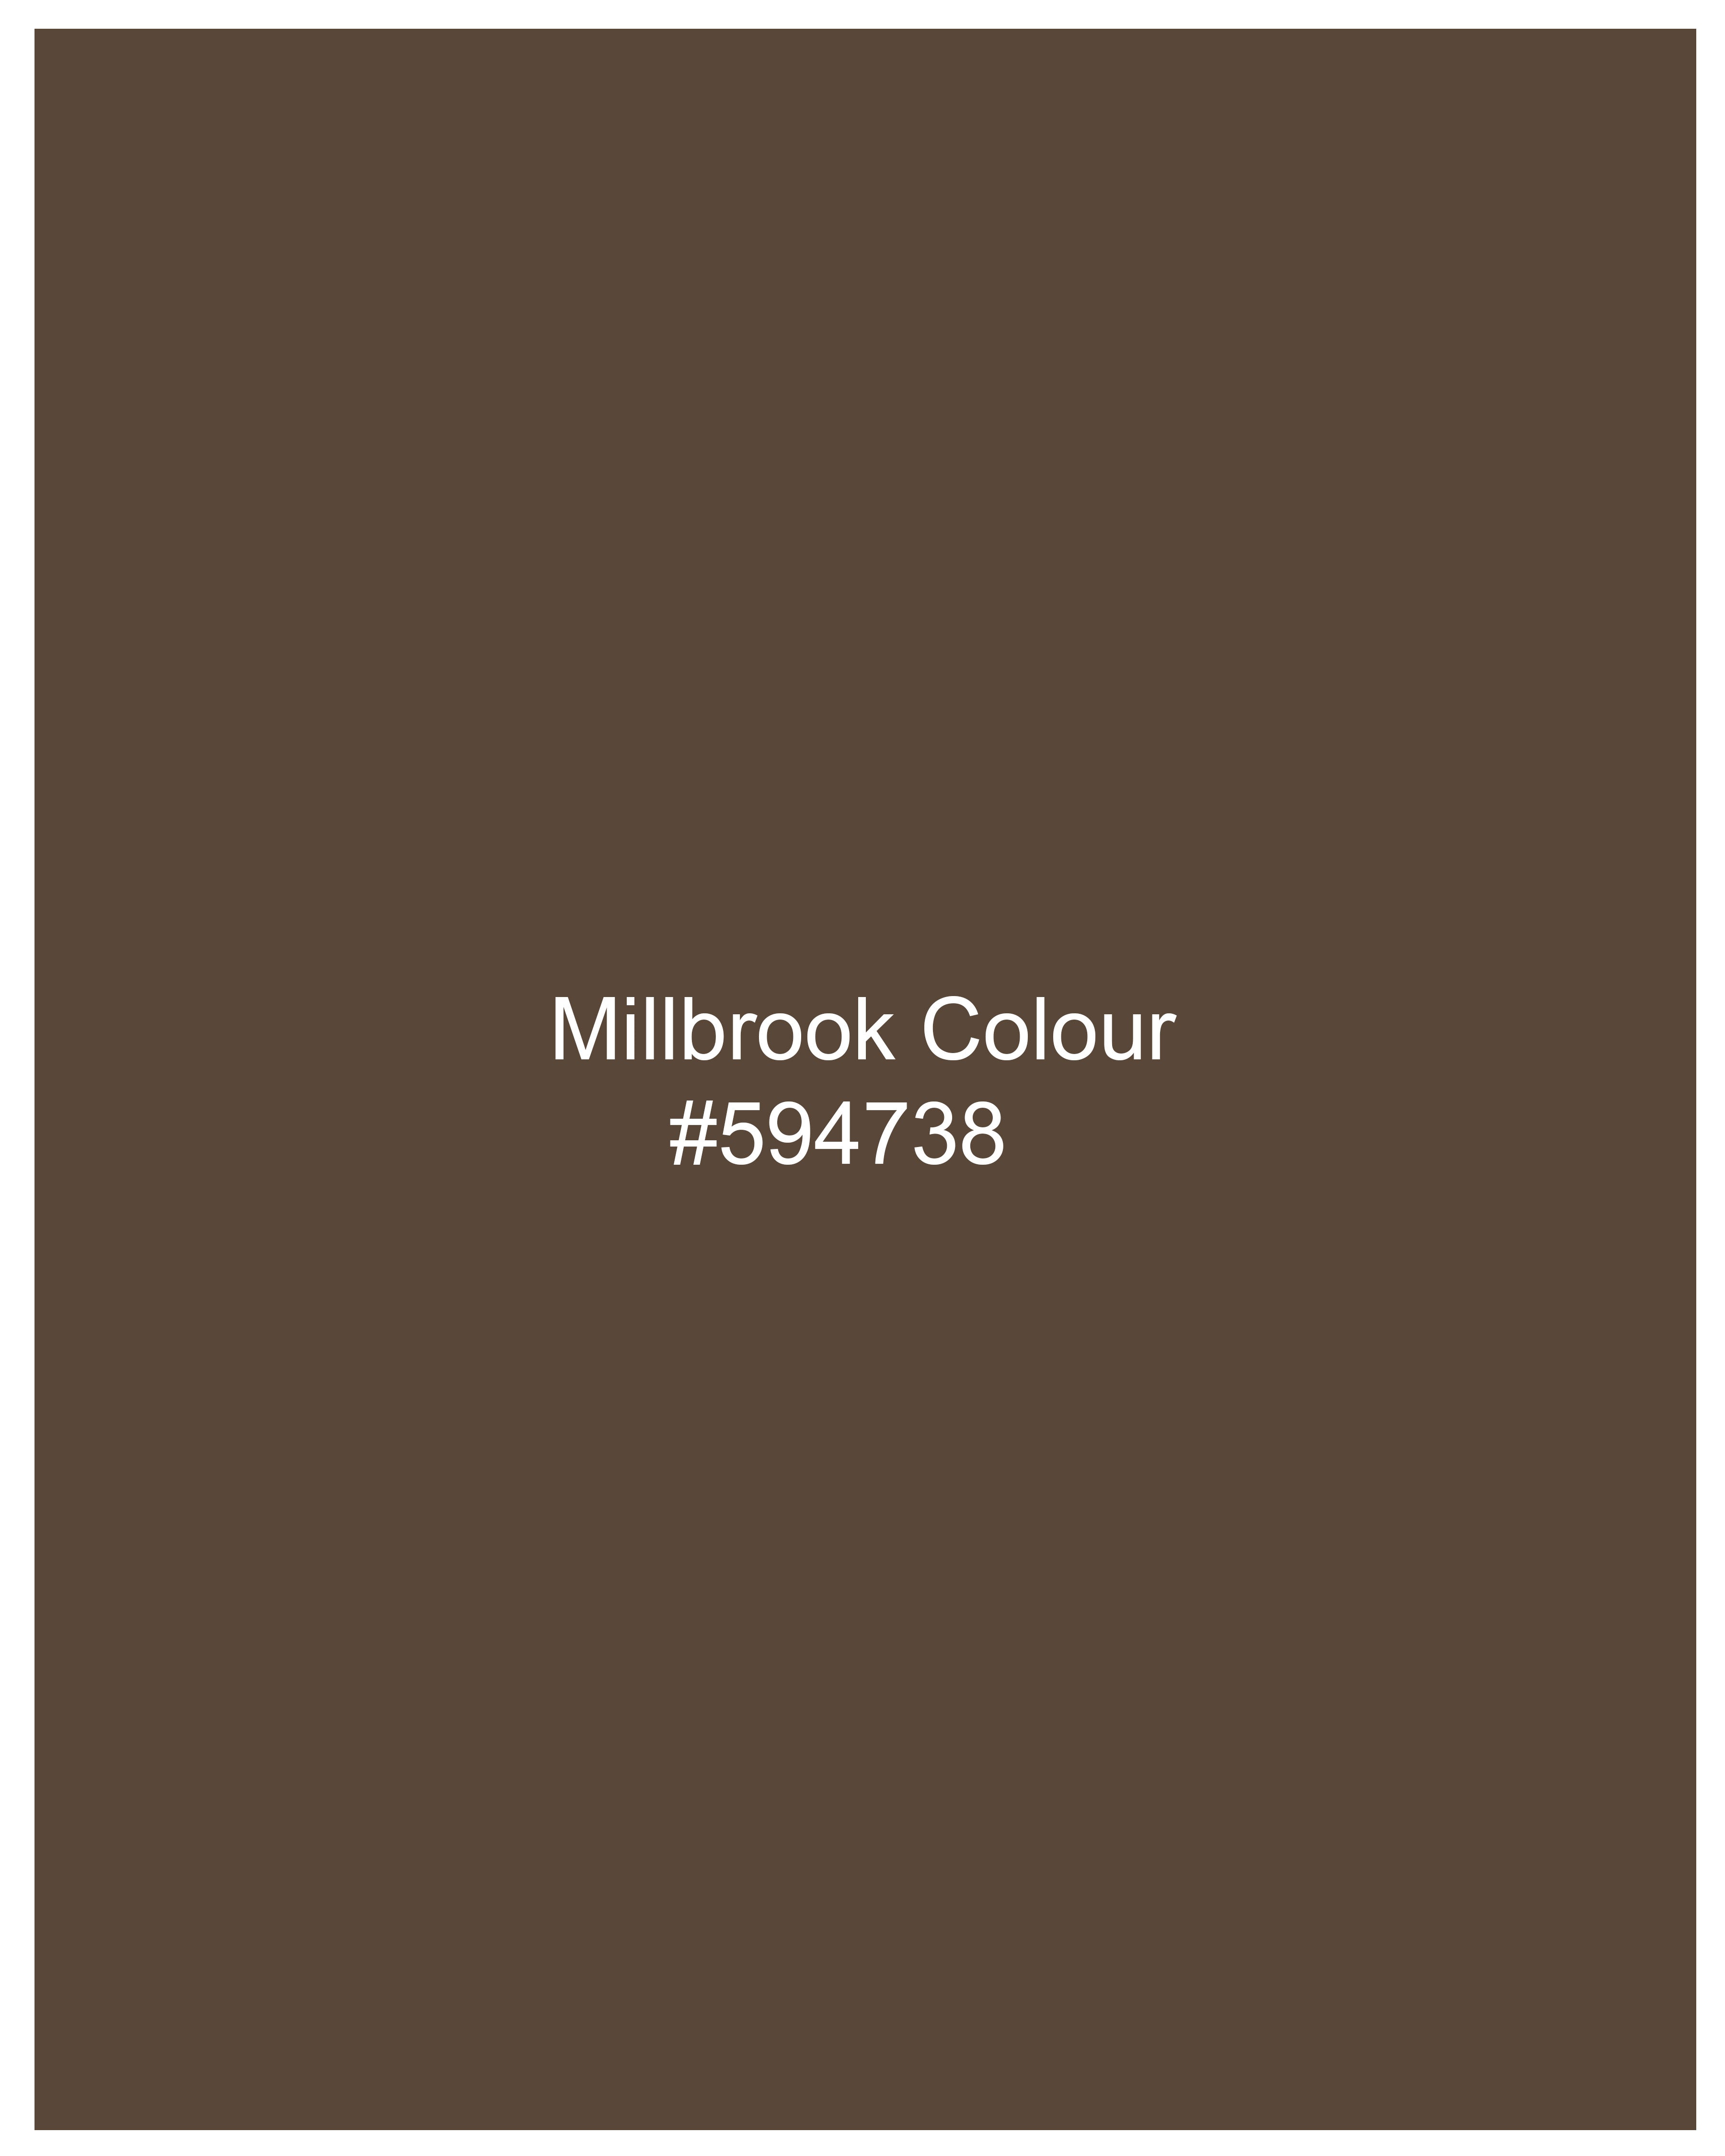 Millbrook Brown Embroidered Super Soft Premium Cotton Shirt 9709-M-CB-38, 9709-M-CB-H-38, 9709-M-CB-39, 9709-M-CB-H-39, 9709-M-CB-40, 9709-M-CB-H-40, 9709-M-CB-42, 9709-M-CB-H-42, 9709-M-CB-44, 9709-M-CB-H-44, 9709-M-CB-46, 9709-M-CB-H-46, 9709-M-CB-48, 9709-M-CB-H-48, 9709-M-CB-50, 9709-M-CB-H-50, 9709-M-CB-52, 9709-M-CB-H-52